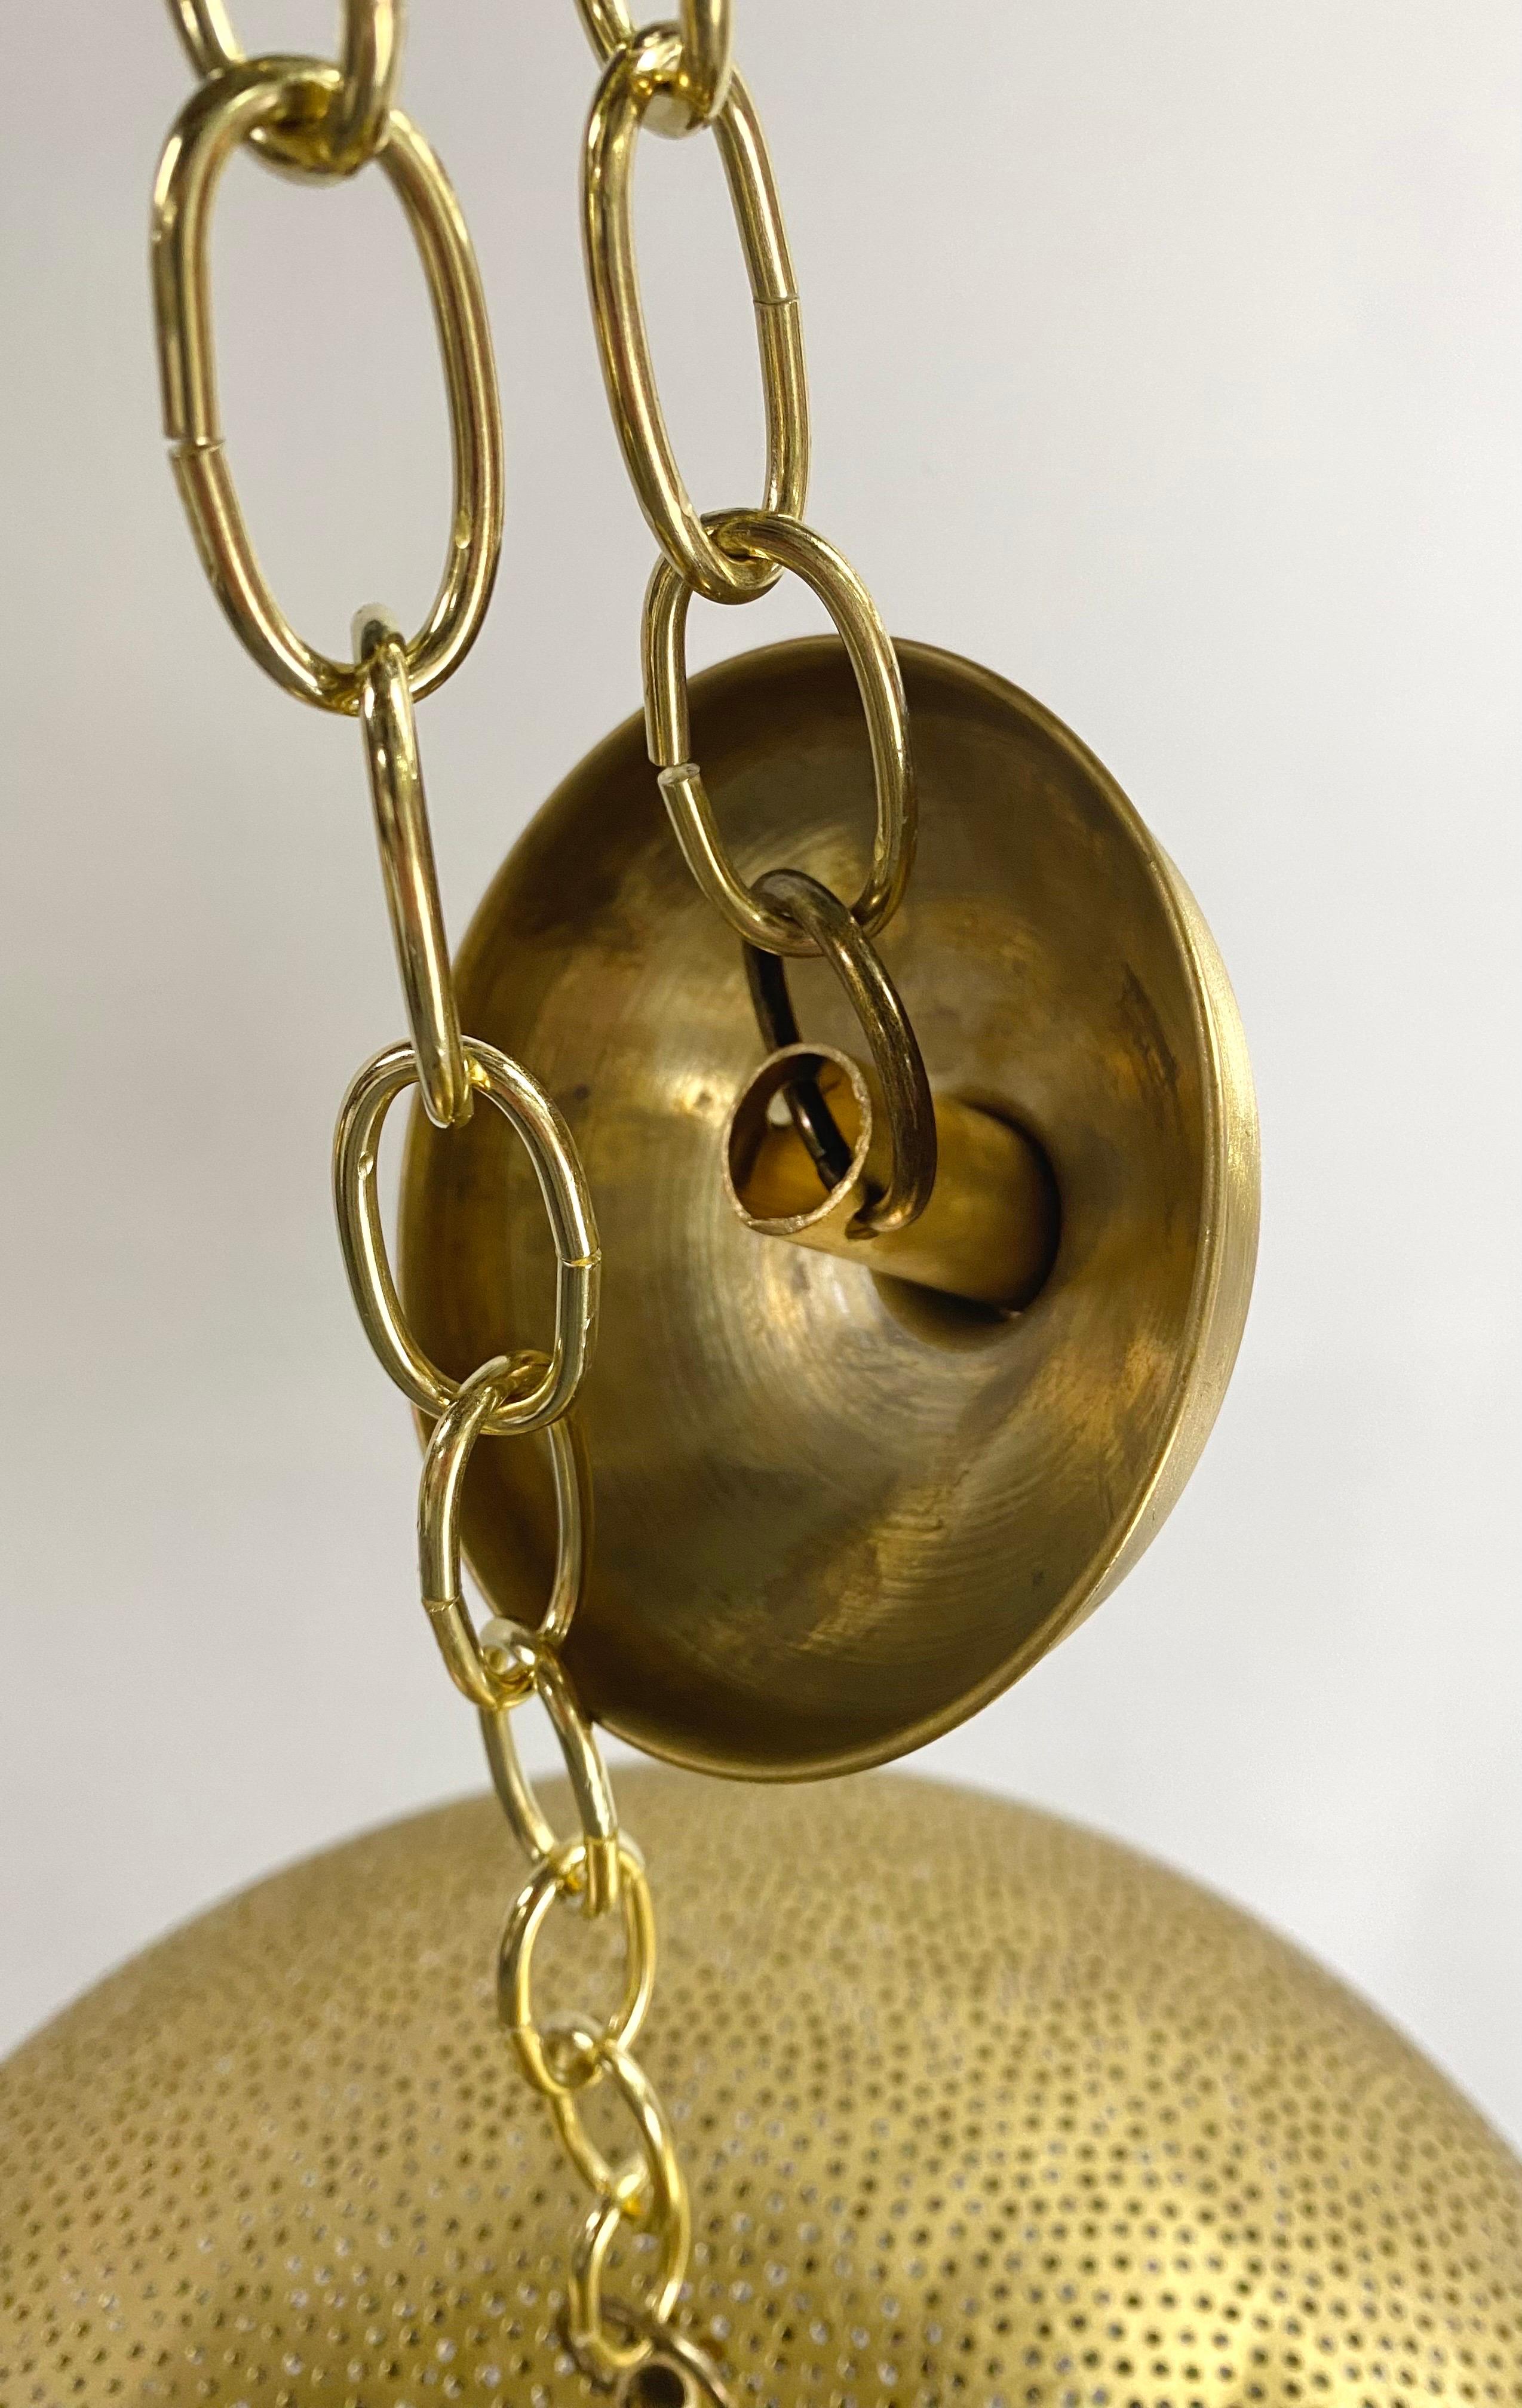 Modern Boho Chic Style Oval Brass Pendant or Lantern For Sale 3